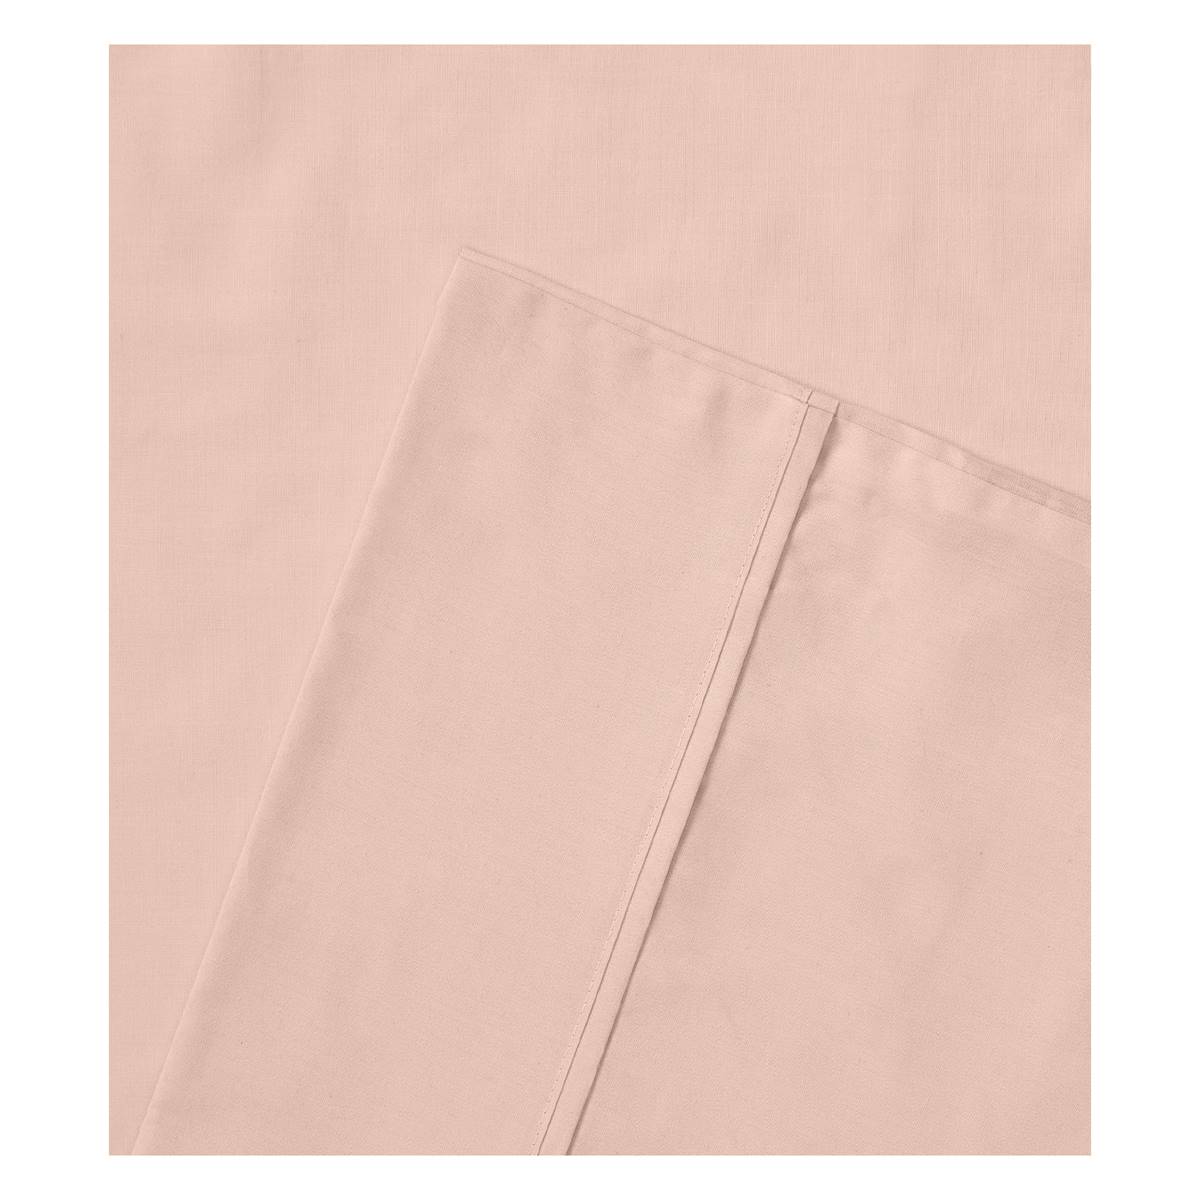 Modern Threads Organic Cotton Rose Sheet Set